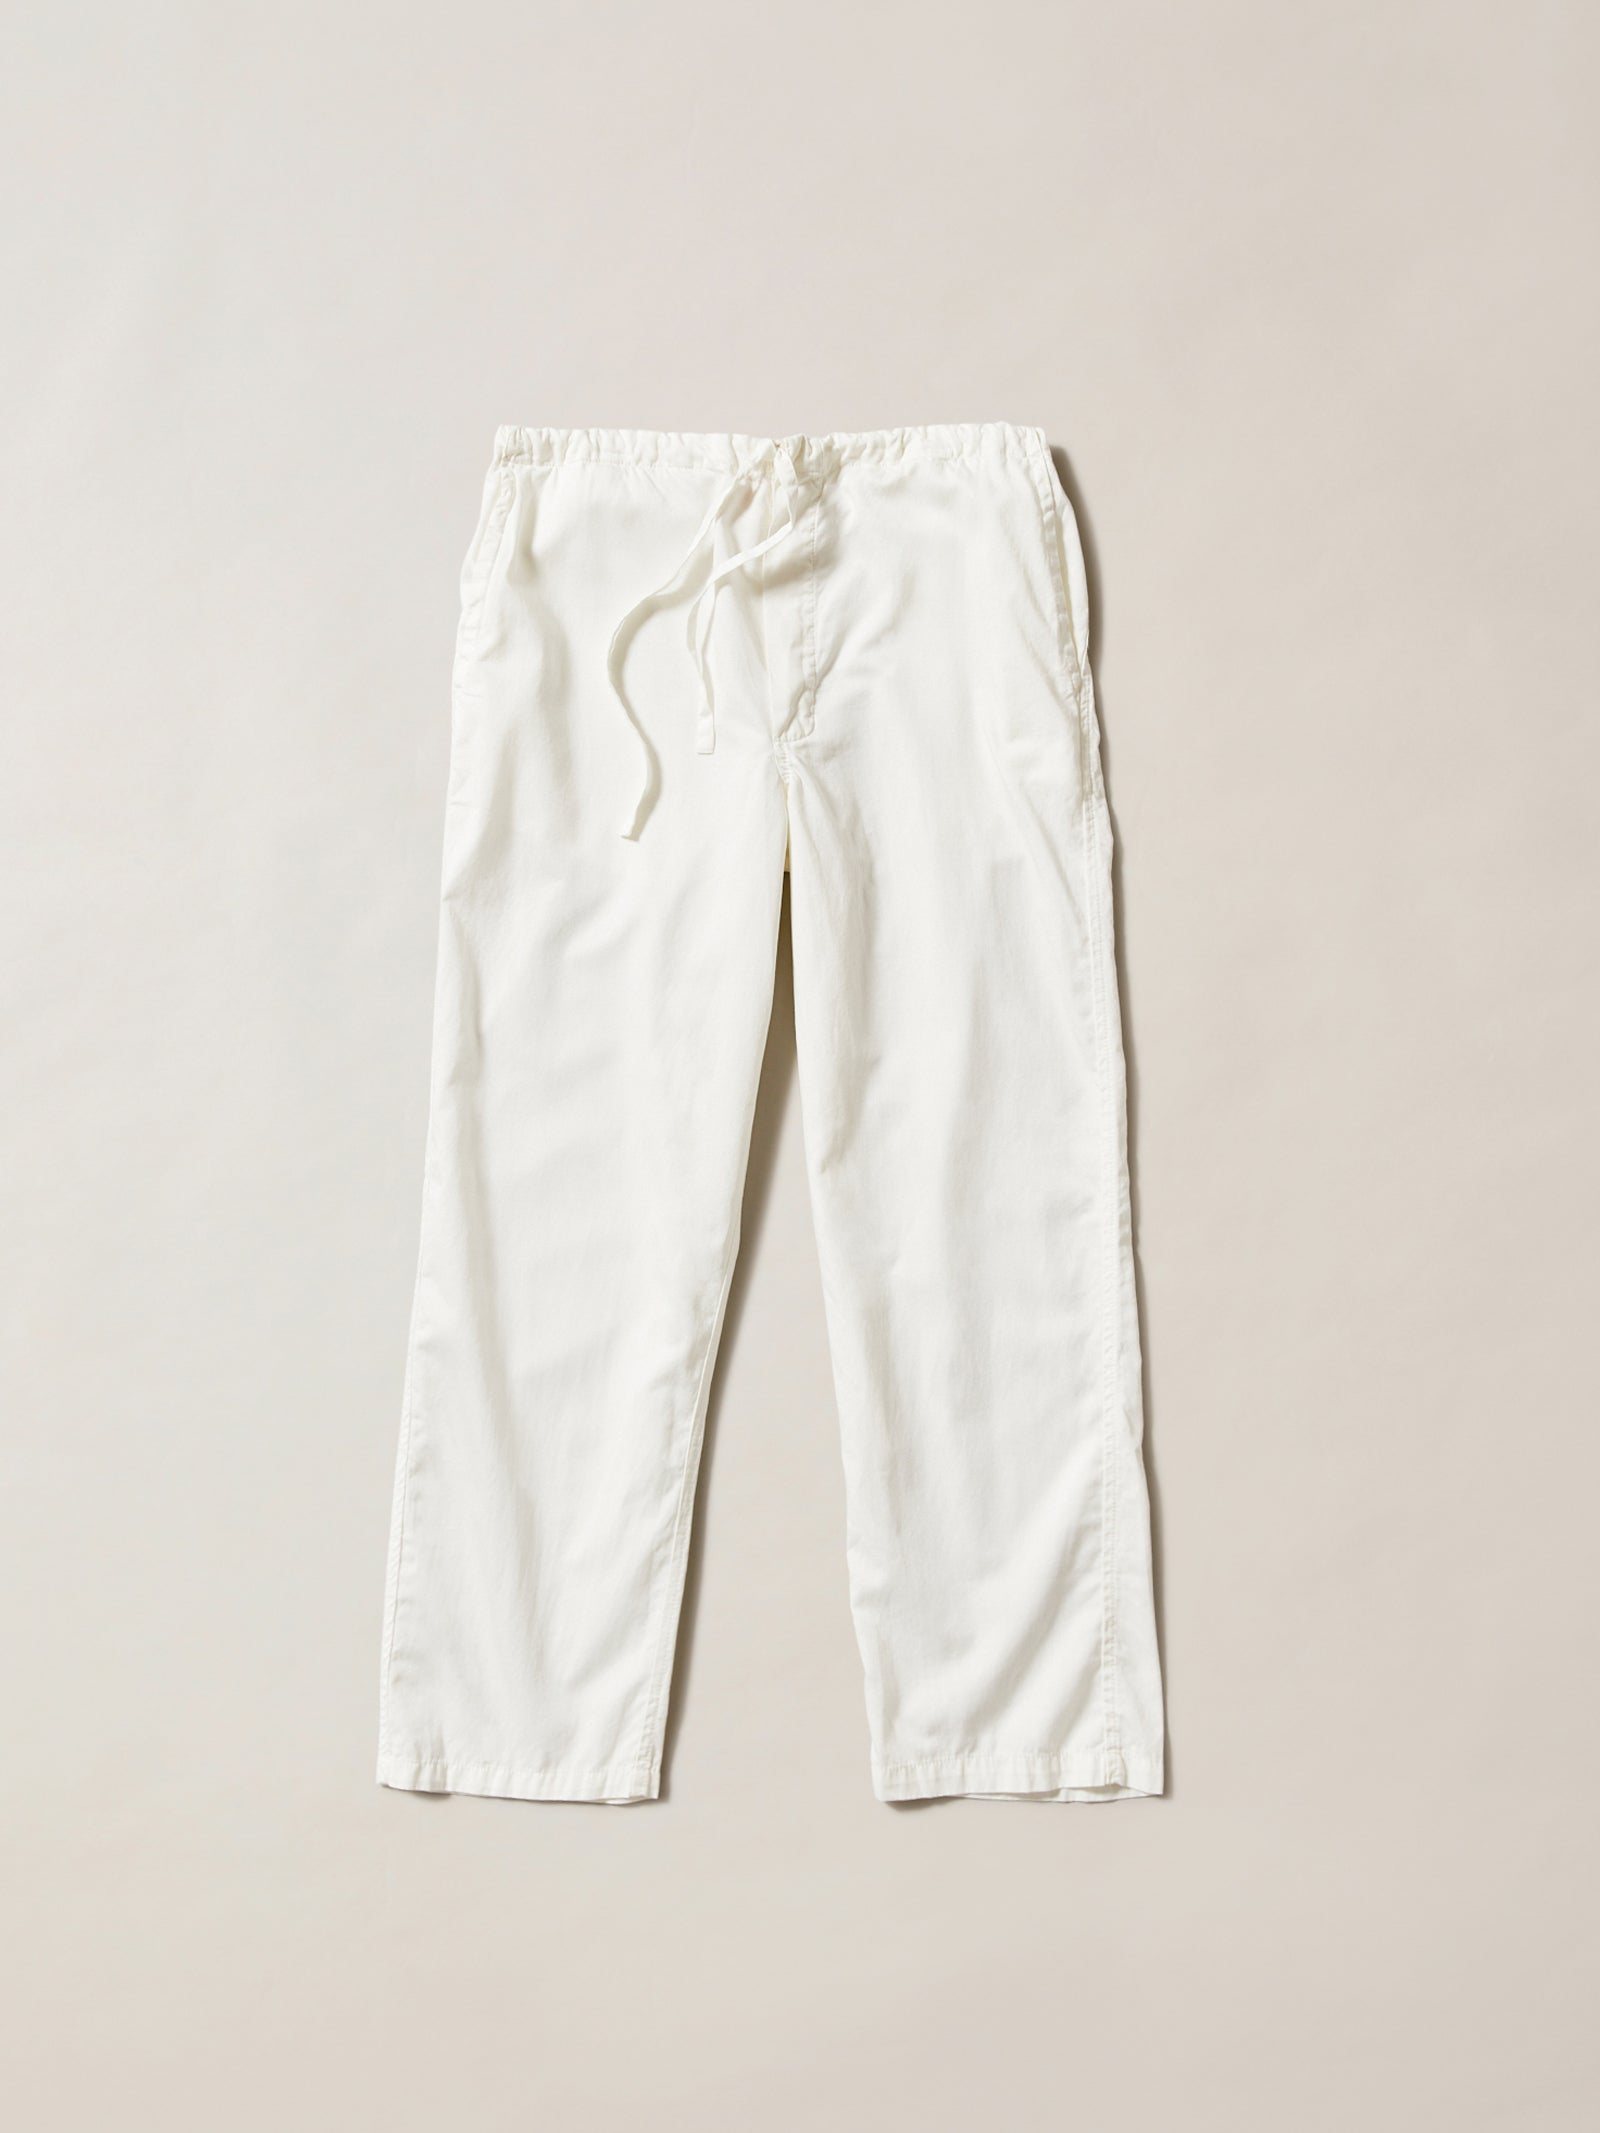 100% cotton white cotton pyjamas, long pyjama pants, drawstring loungepants long